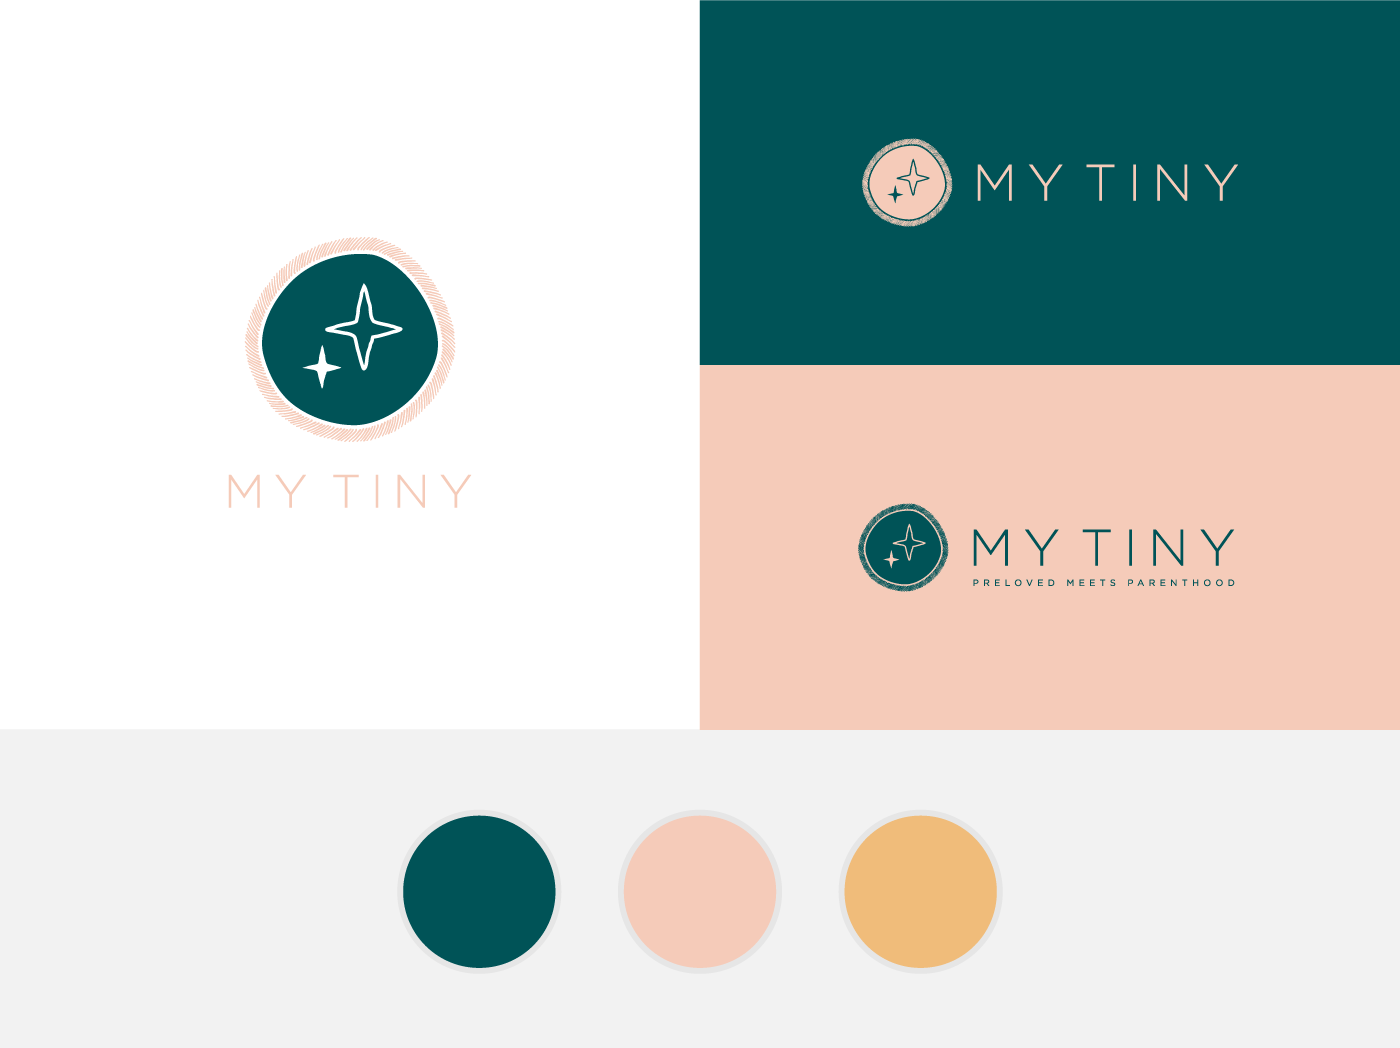 My Tiny logo designs and branding